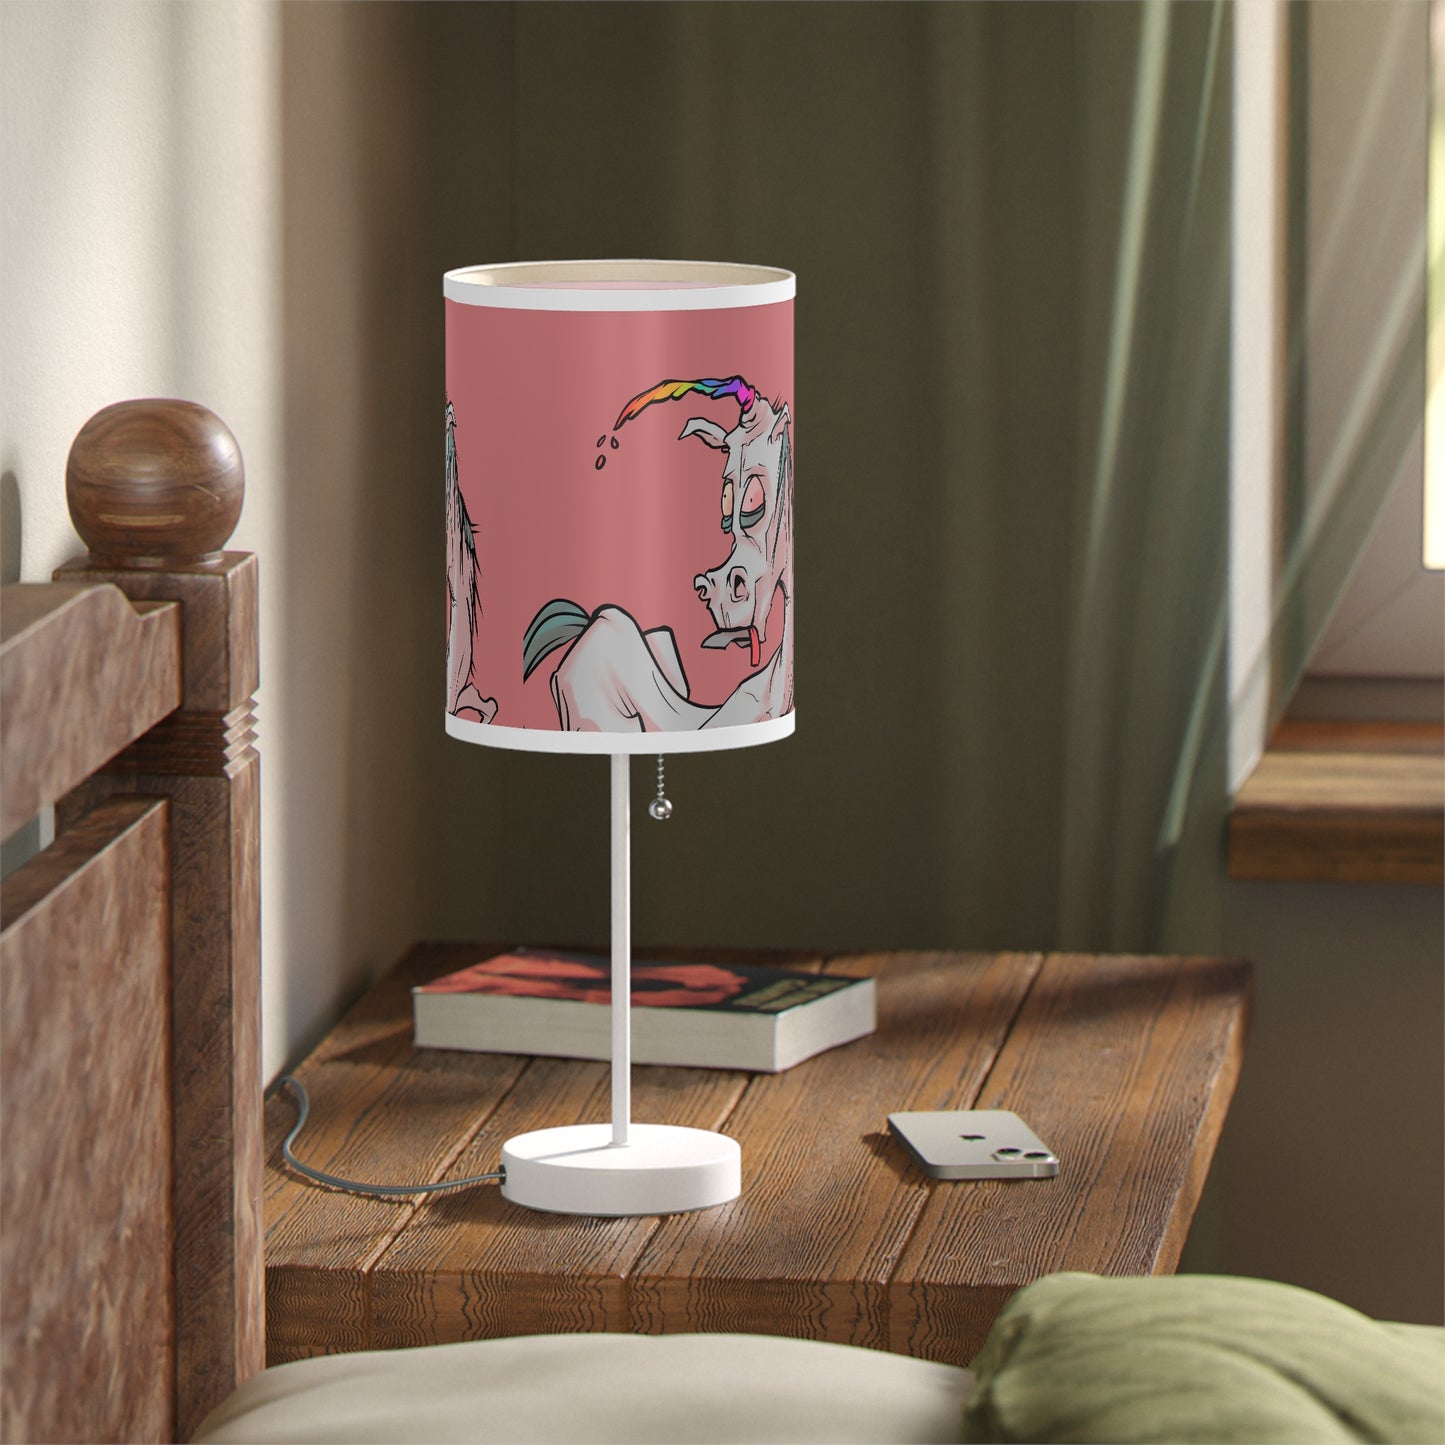 Unicorn Mythical Creature Lamp on a Stand, US|CA plug